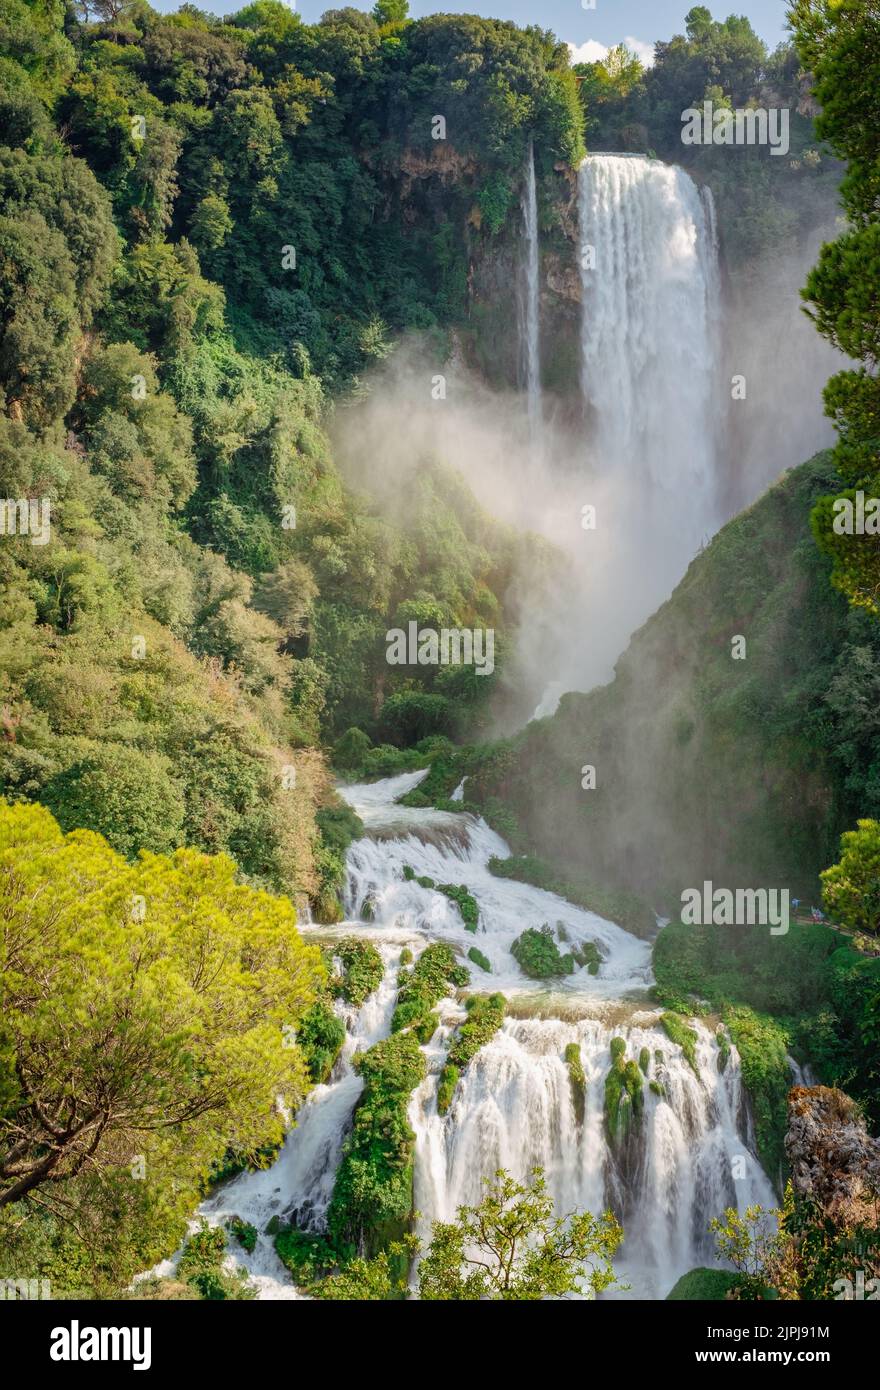 La cascada de Marmore con flujo de agua completo. Valnerina, Terni, Umbría, Italia. Foto de stock